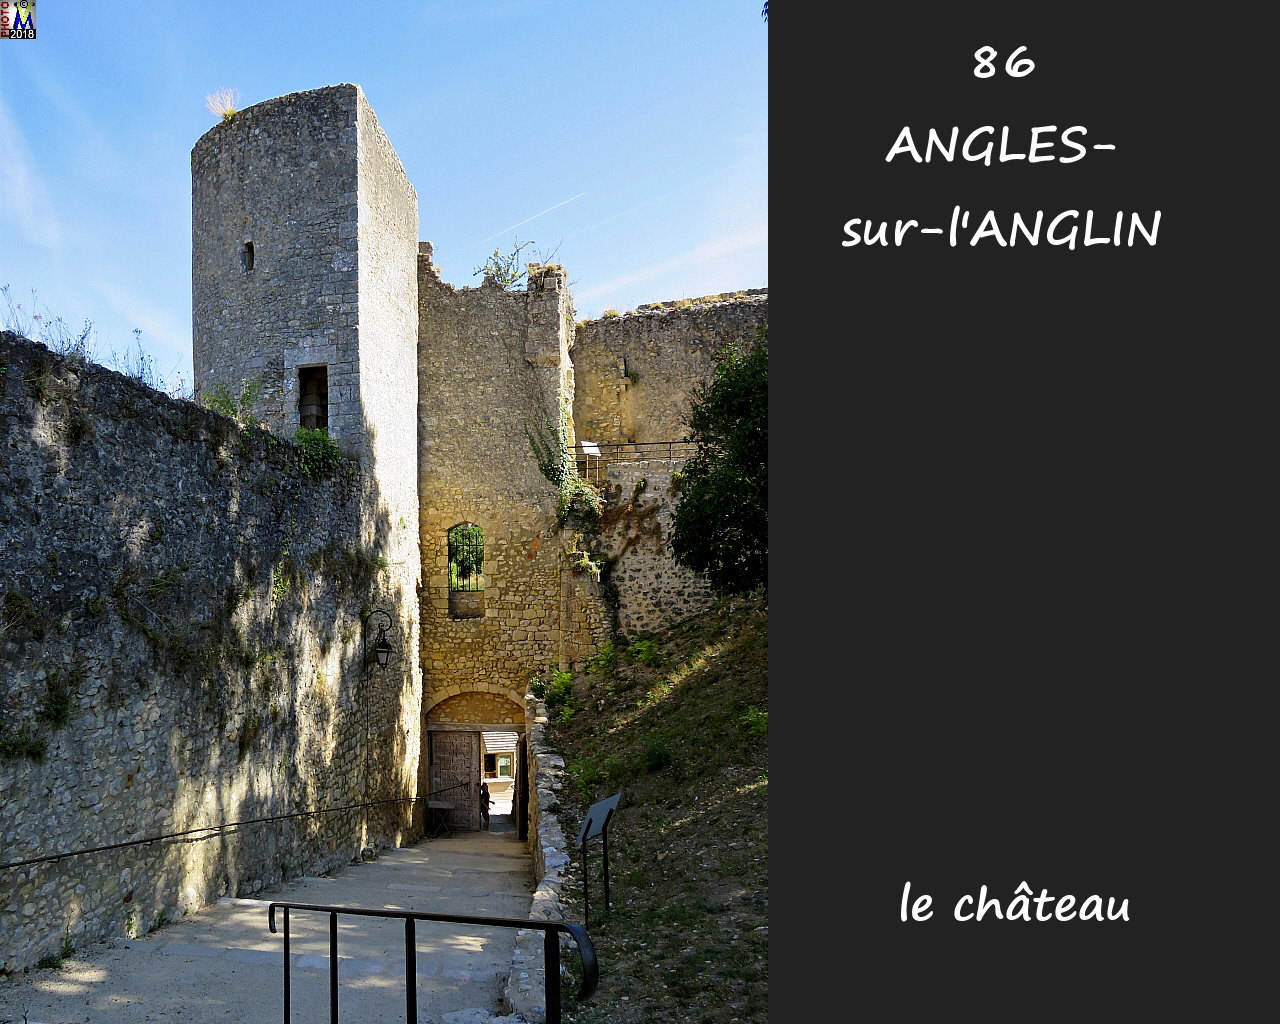 86ANGLES-S-ANGLIN_chateau_1110.jpg